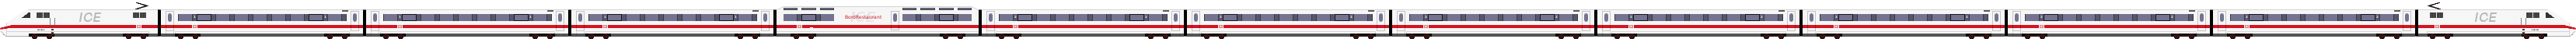 Train Image